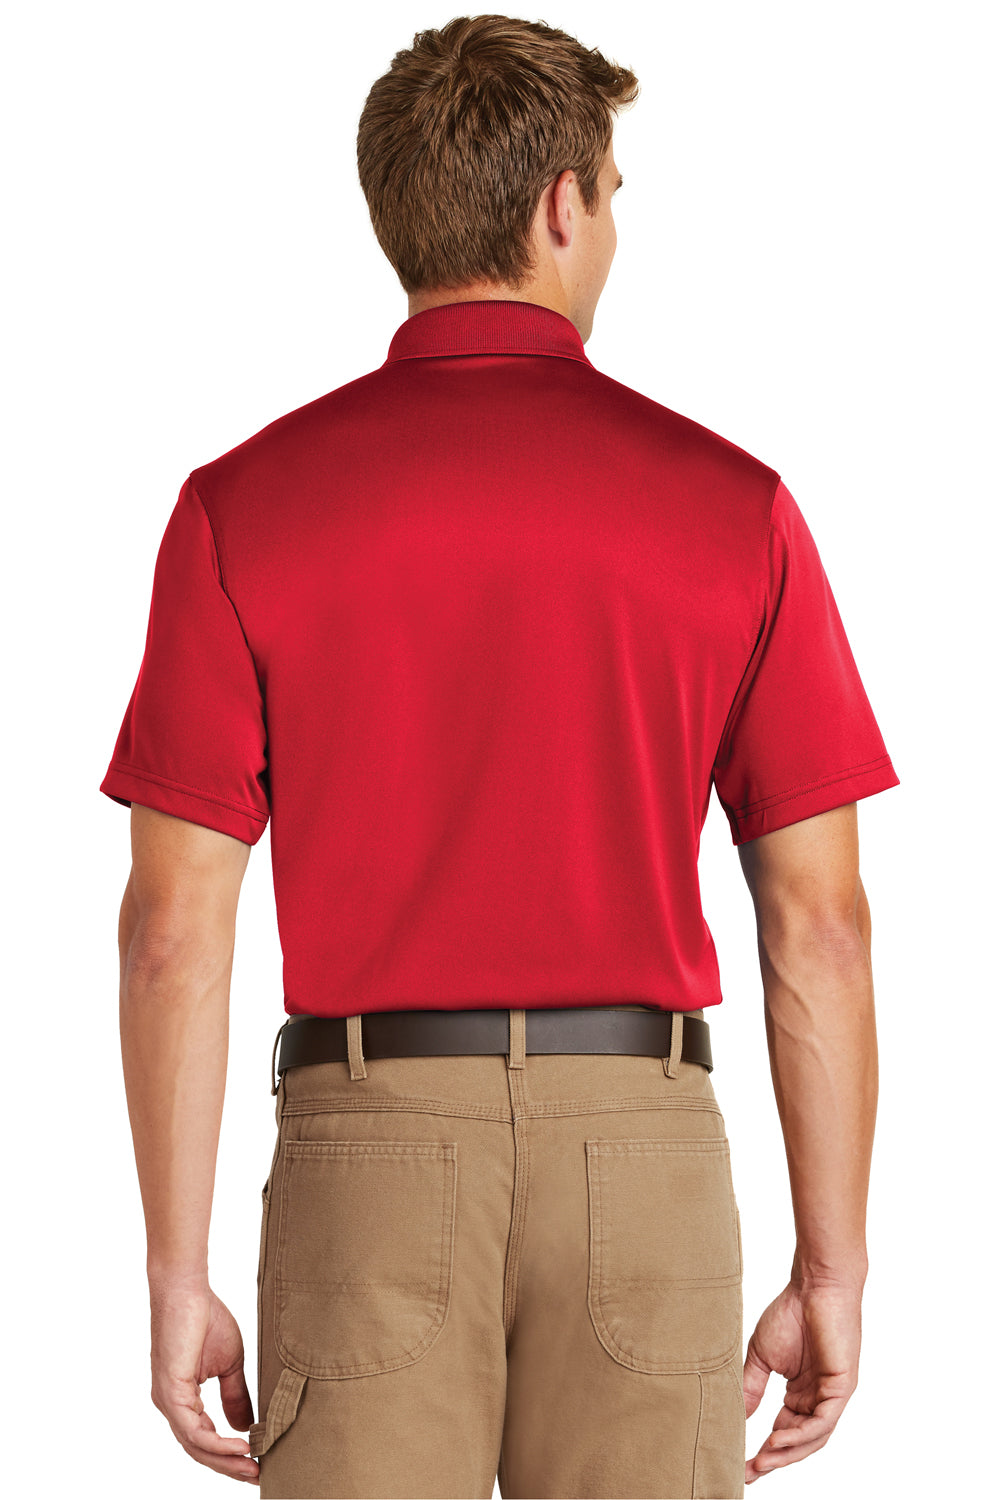 CornerStone CS412 Mens Select Moisture Wicking Short Sleeve Polo Shirt Red Back